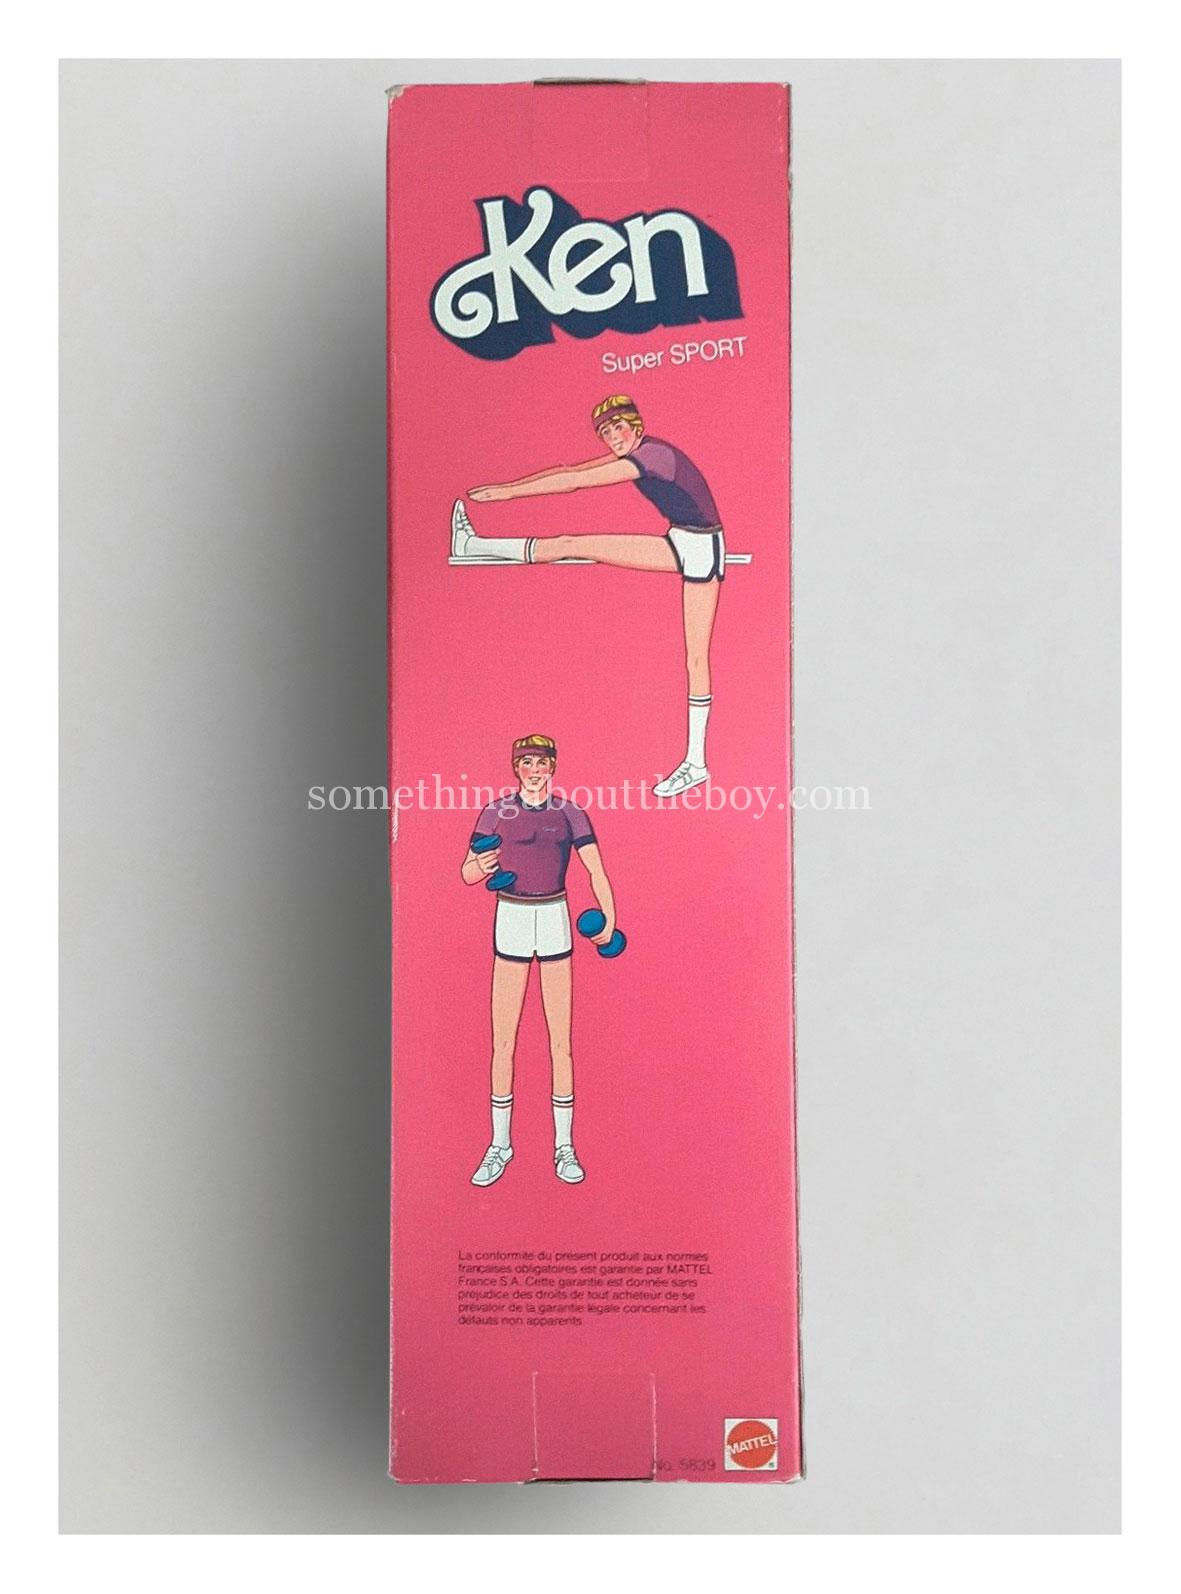 1983 #5839 Super Sport Ken reverse of packaging